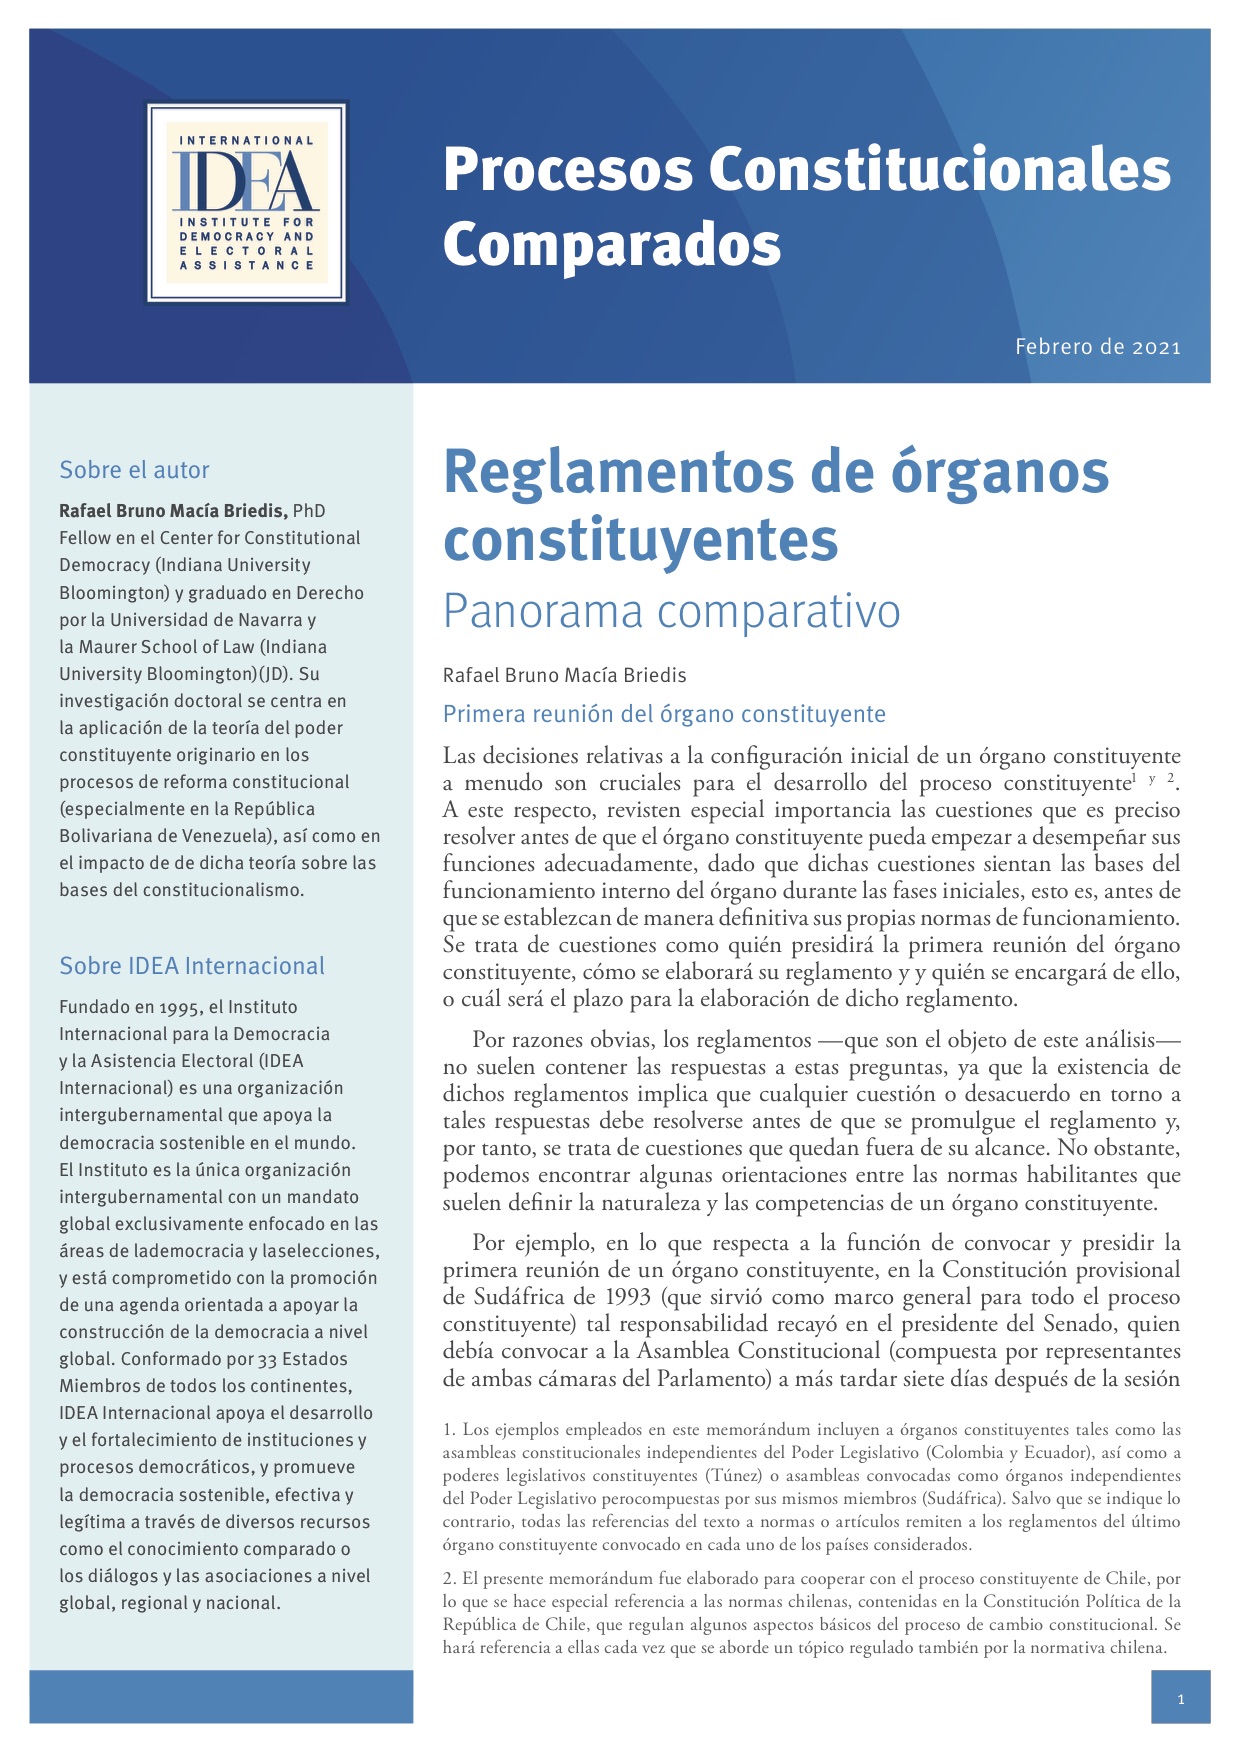 Reglamentos de Órganos Constituyentes - Panorama Comparativo: Procesos Constitucionales Comparados